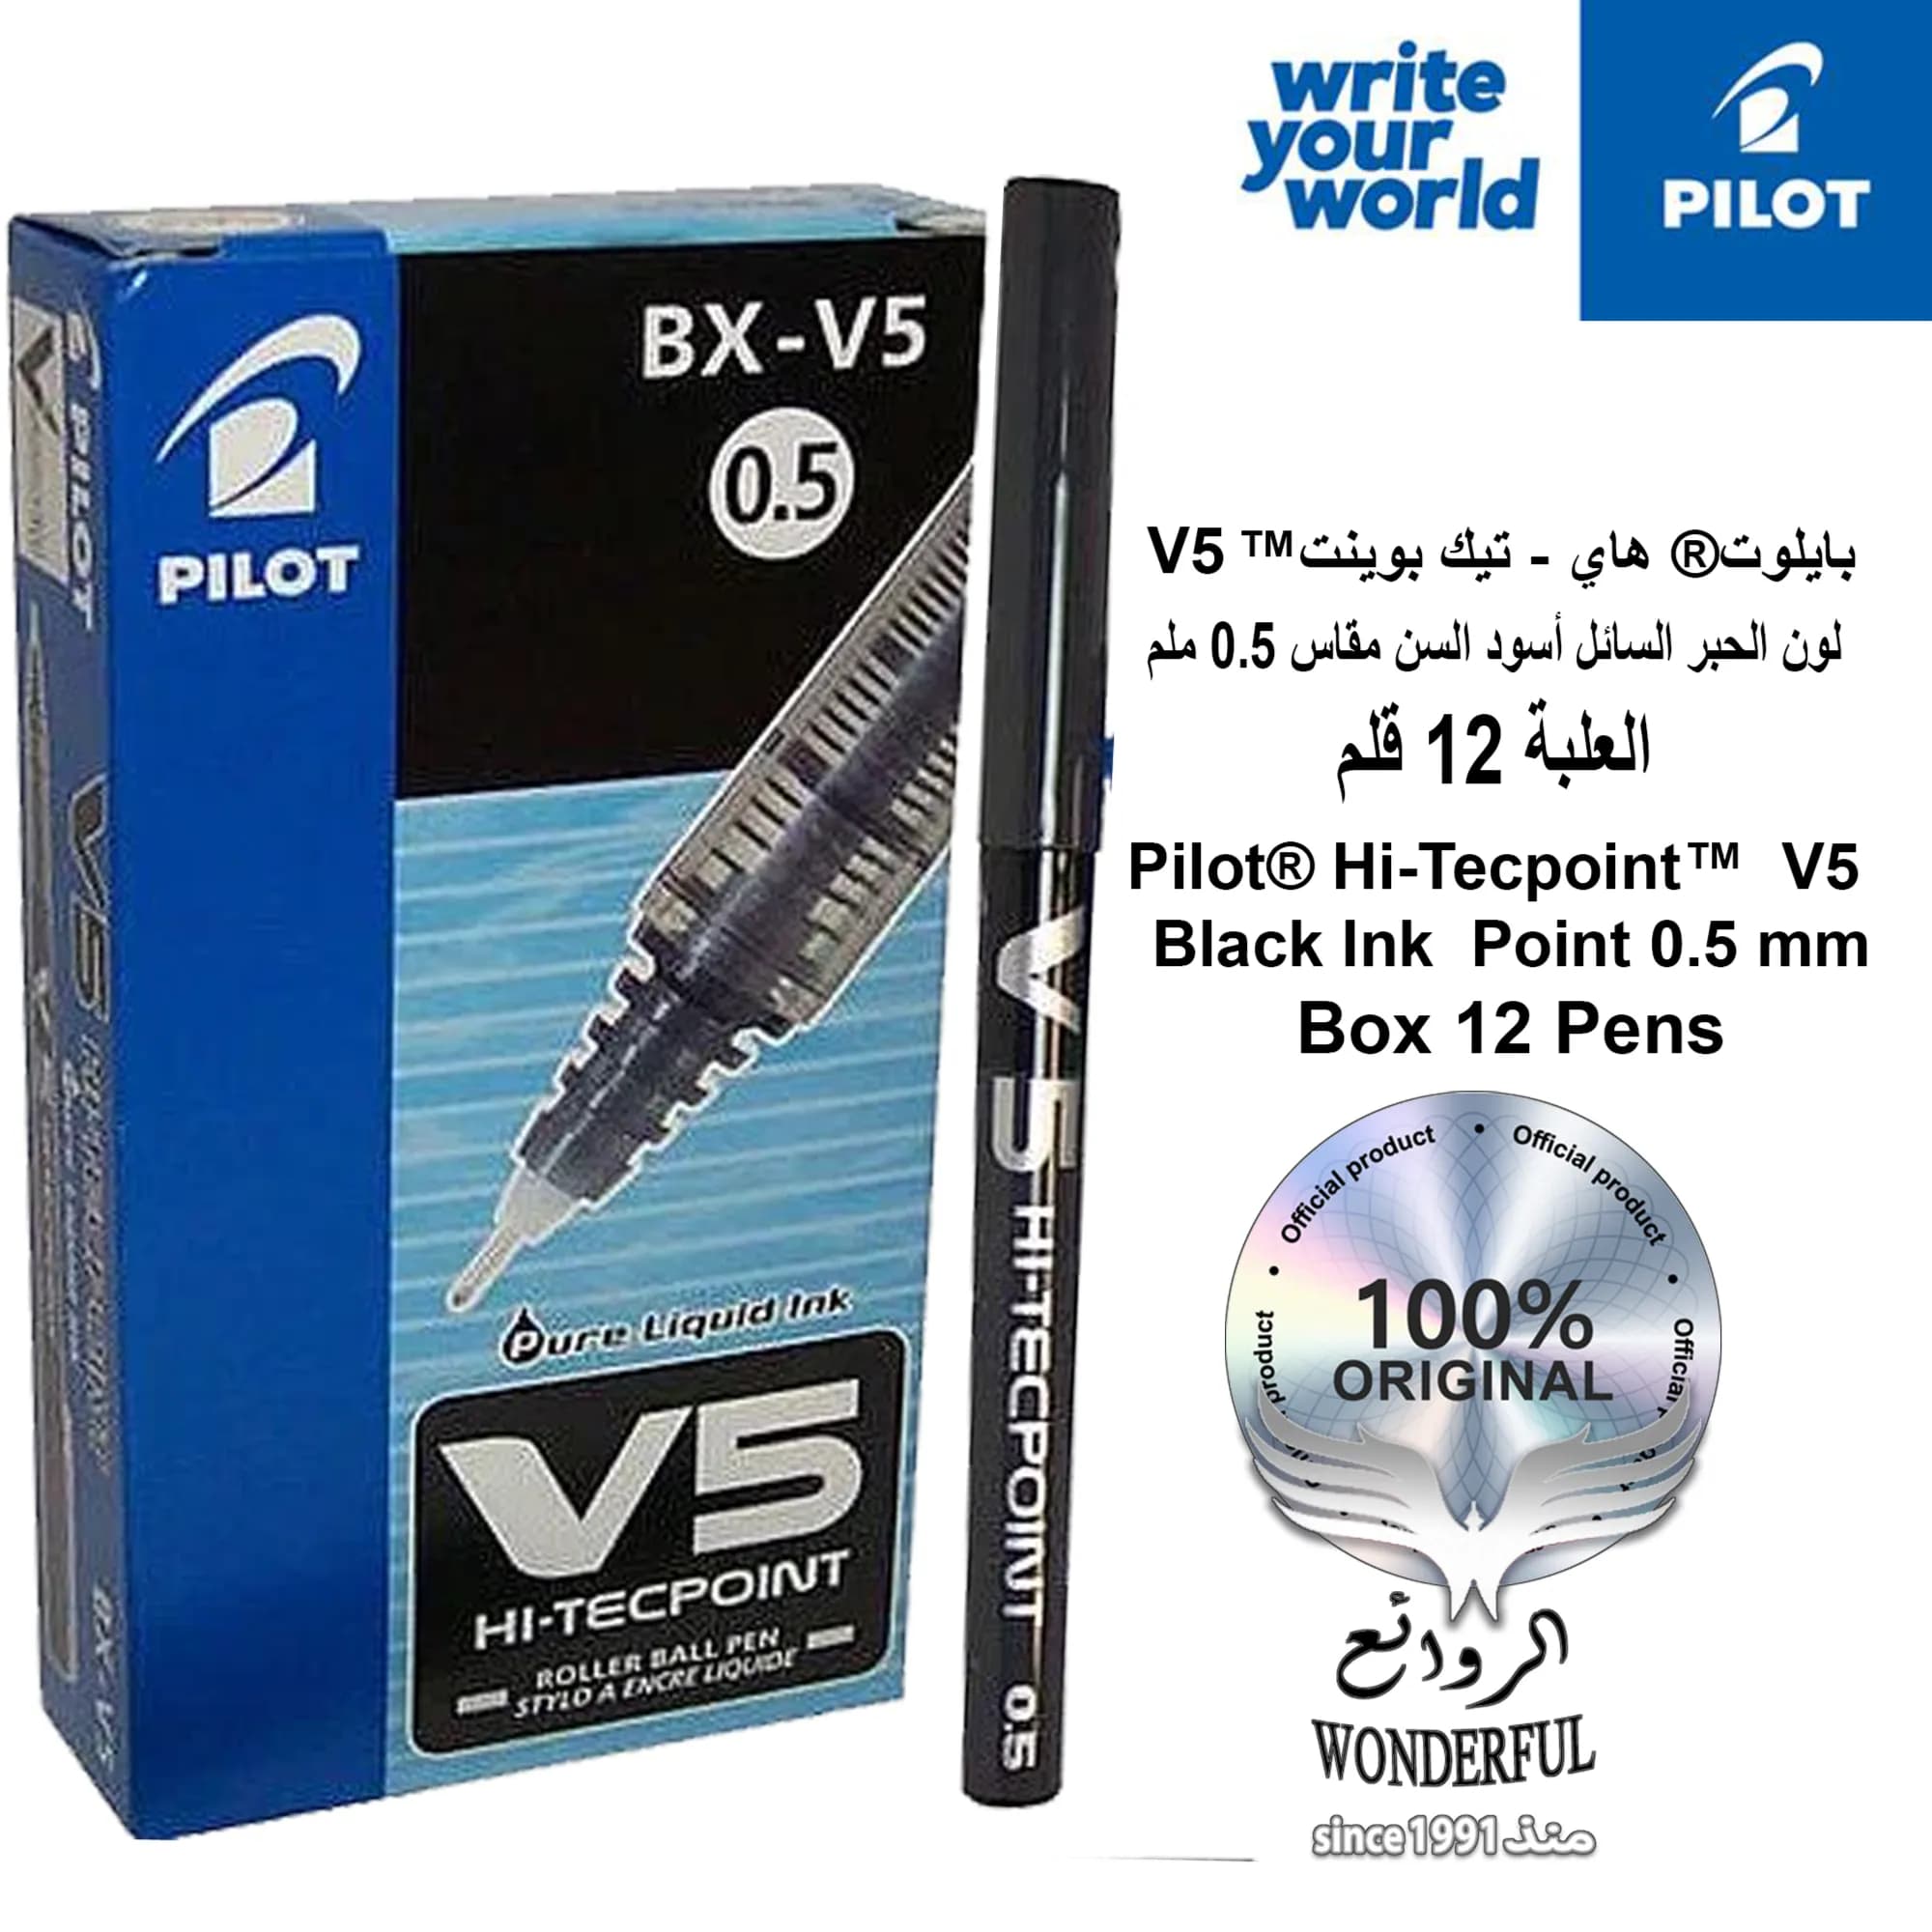 Pilot® Hi-Tecpoint™  V5   Liquid Ink Rollerball Pen - Black Ink - Fine Needle Tip Point 0.5 mm - Box 12 Pens